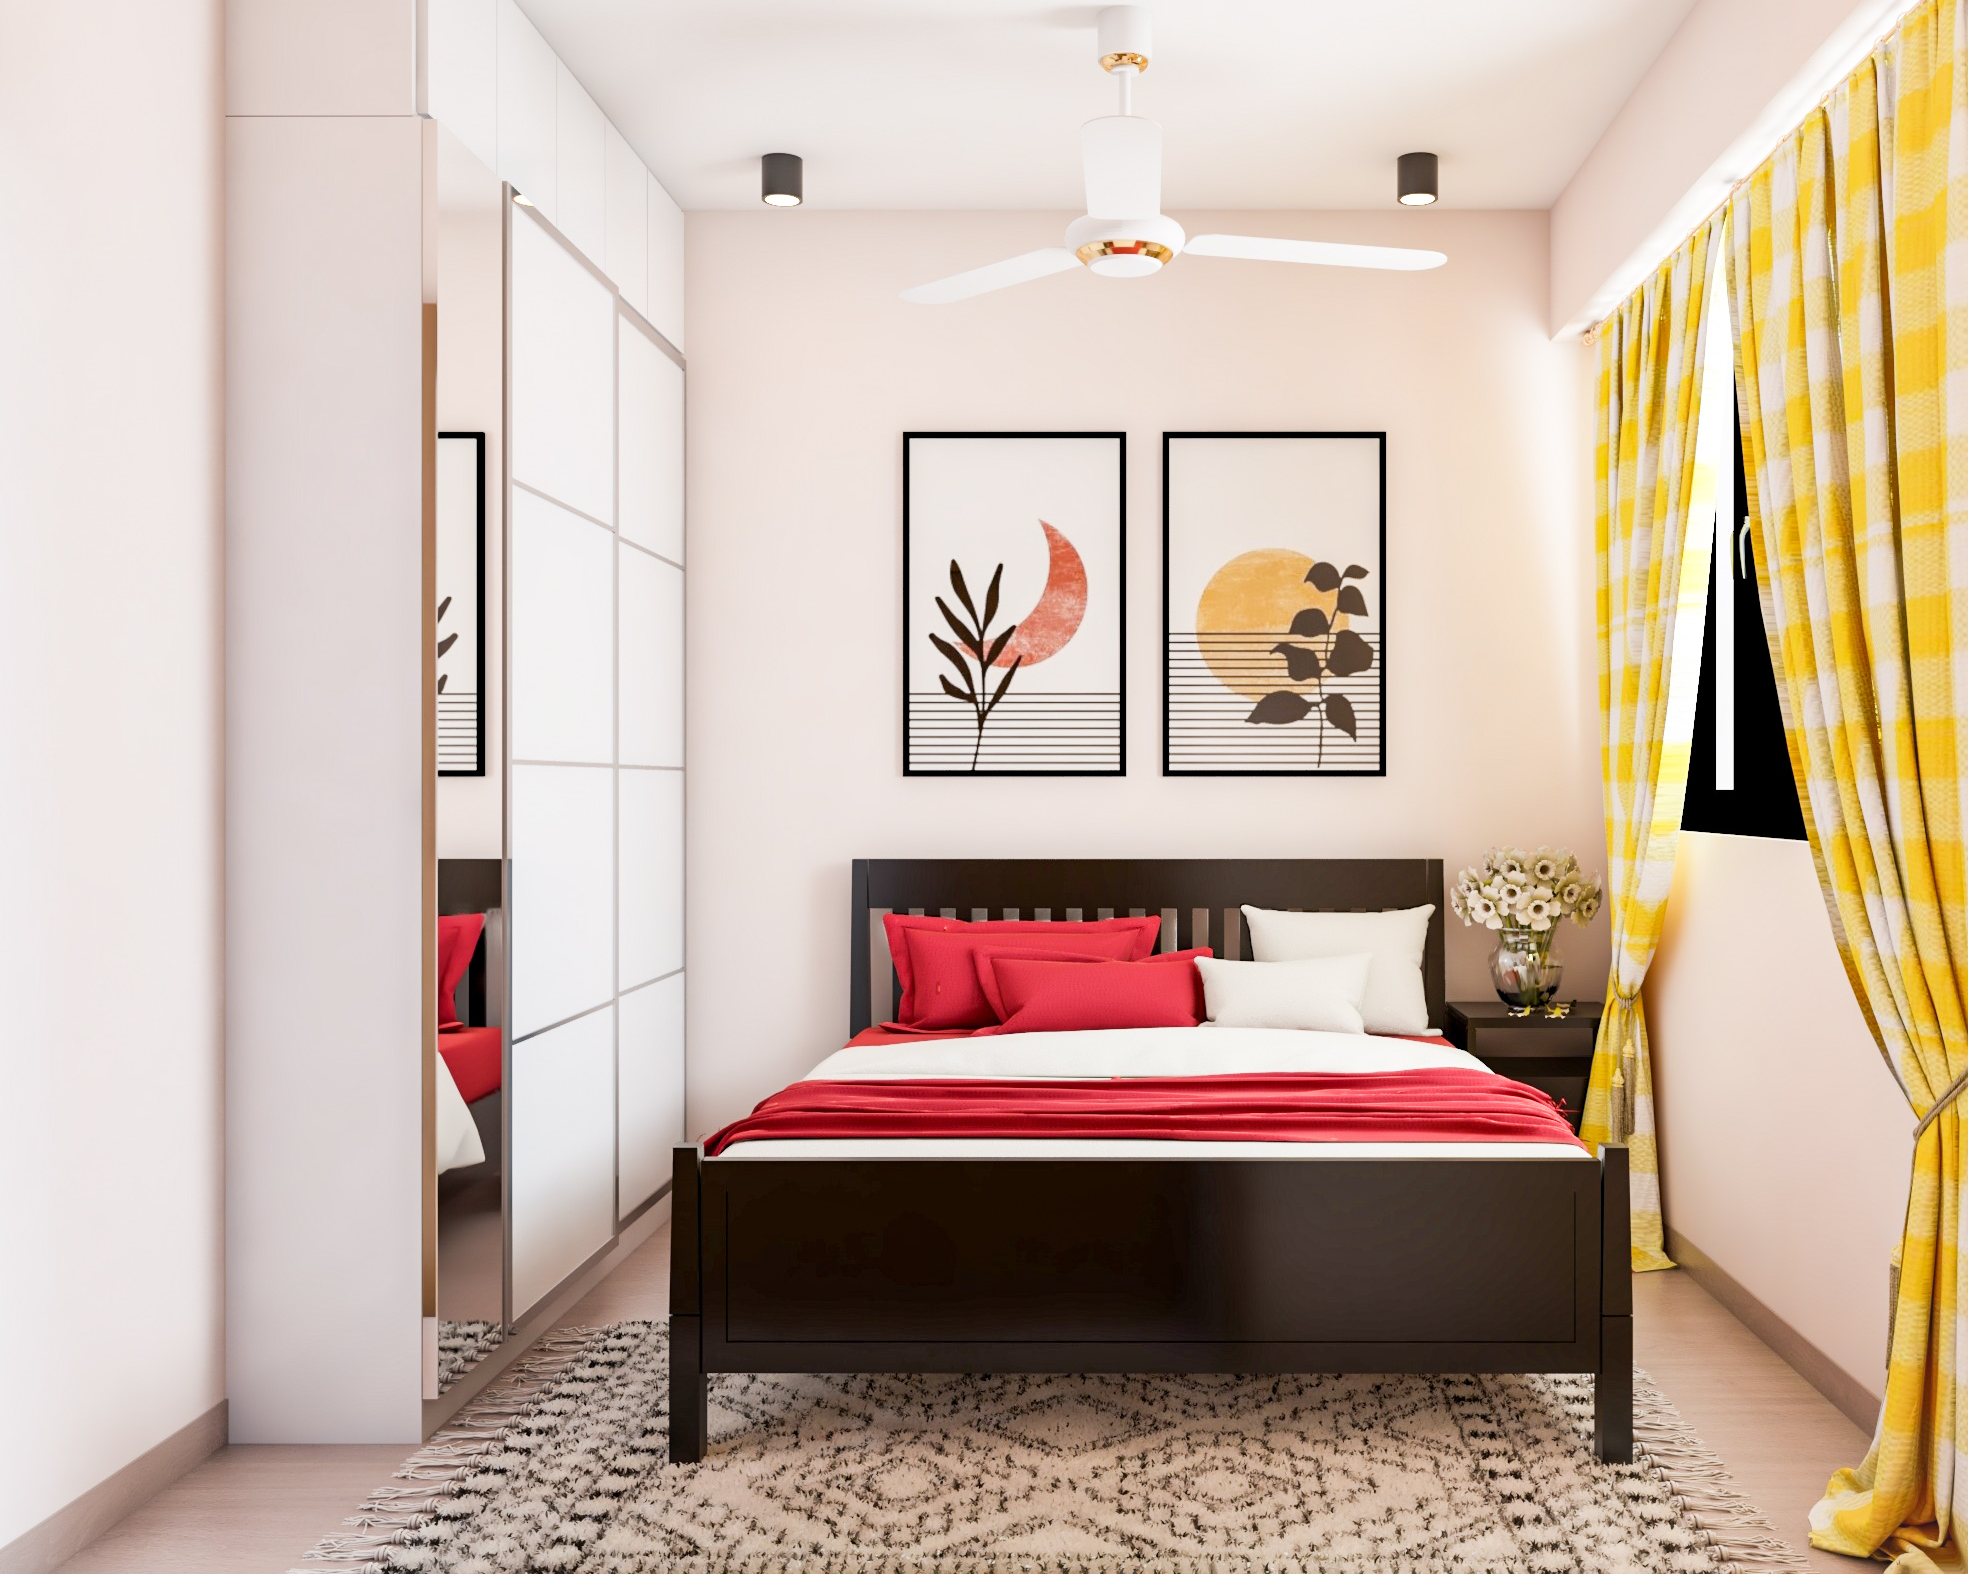 Modern Master Bedroom Design With Vibrant Interiors